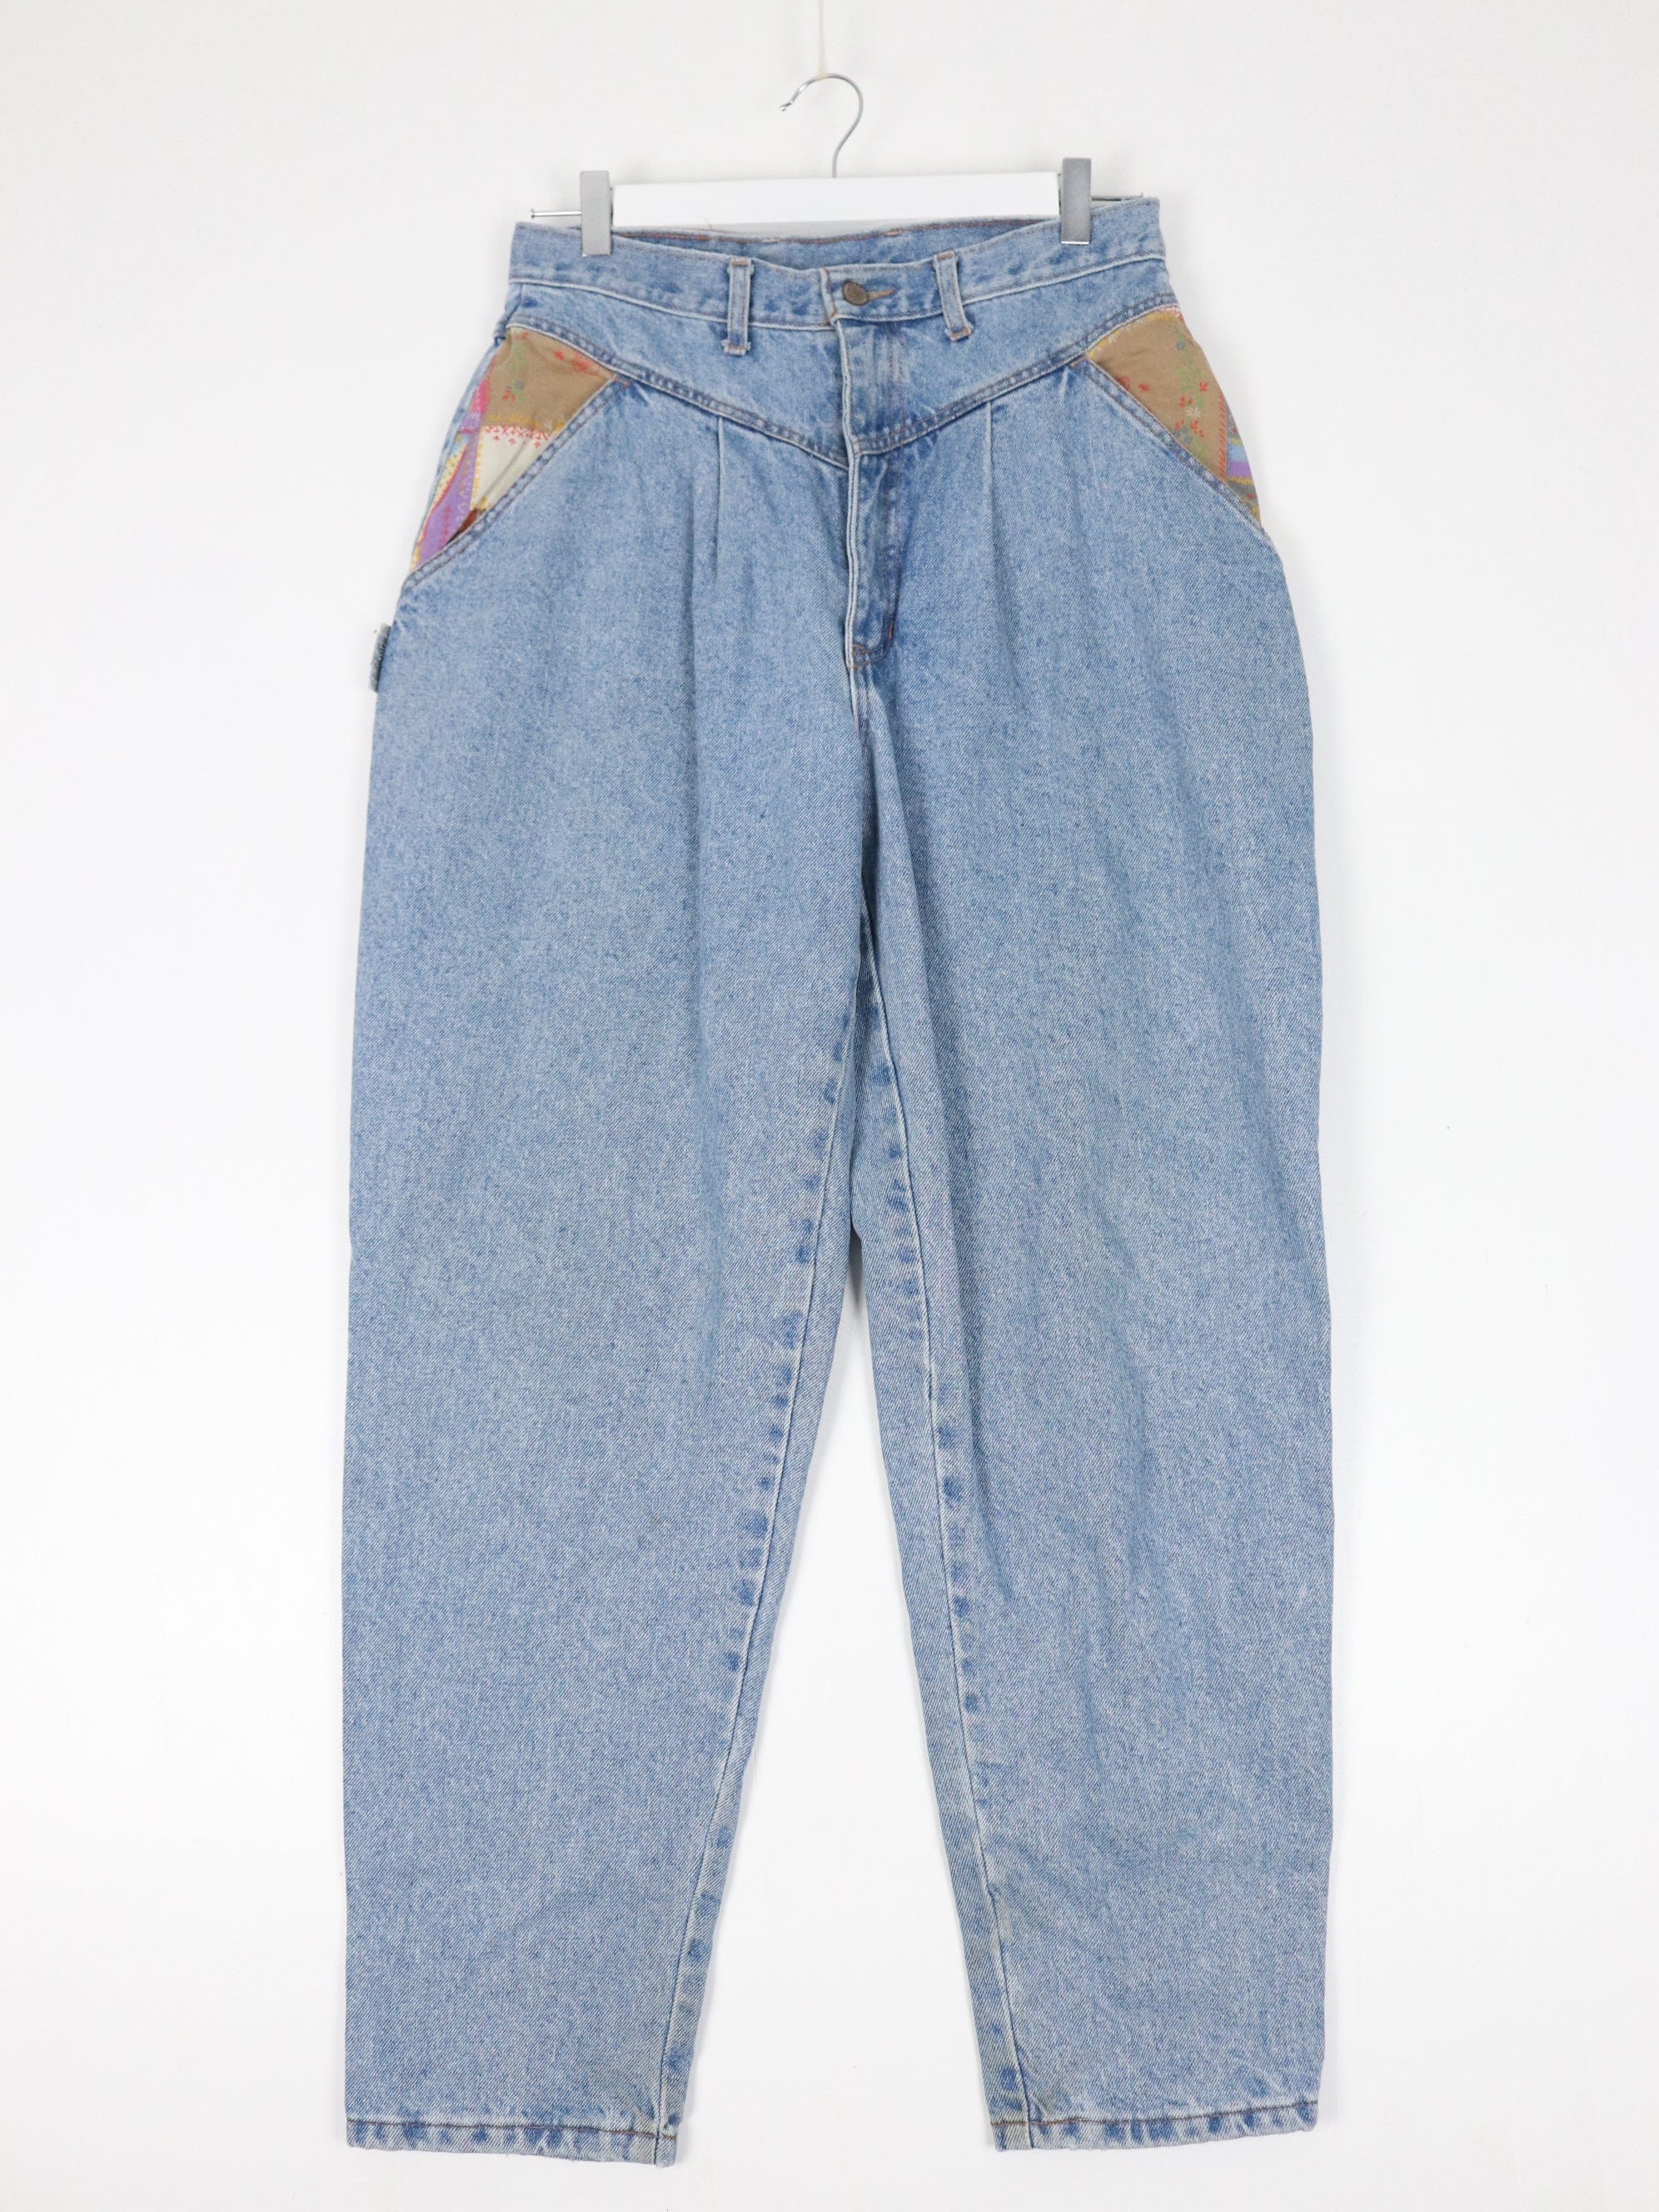 VIntage Hollywood Pants Womens 12 Blue Denim Jeans High Waisted